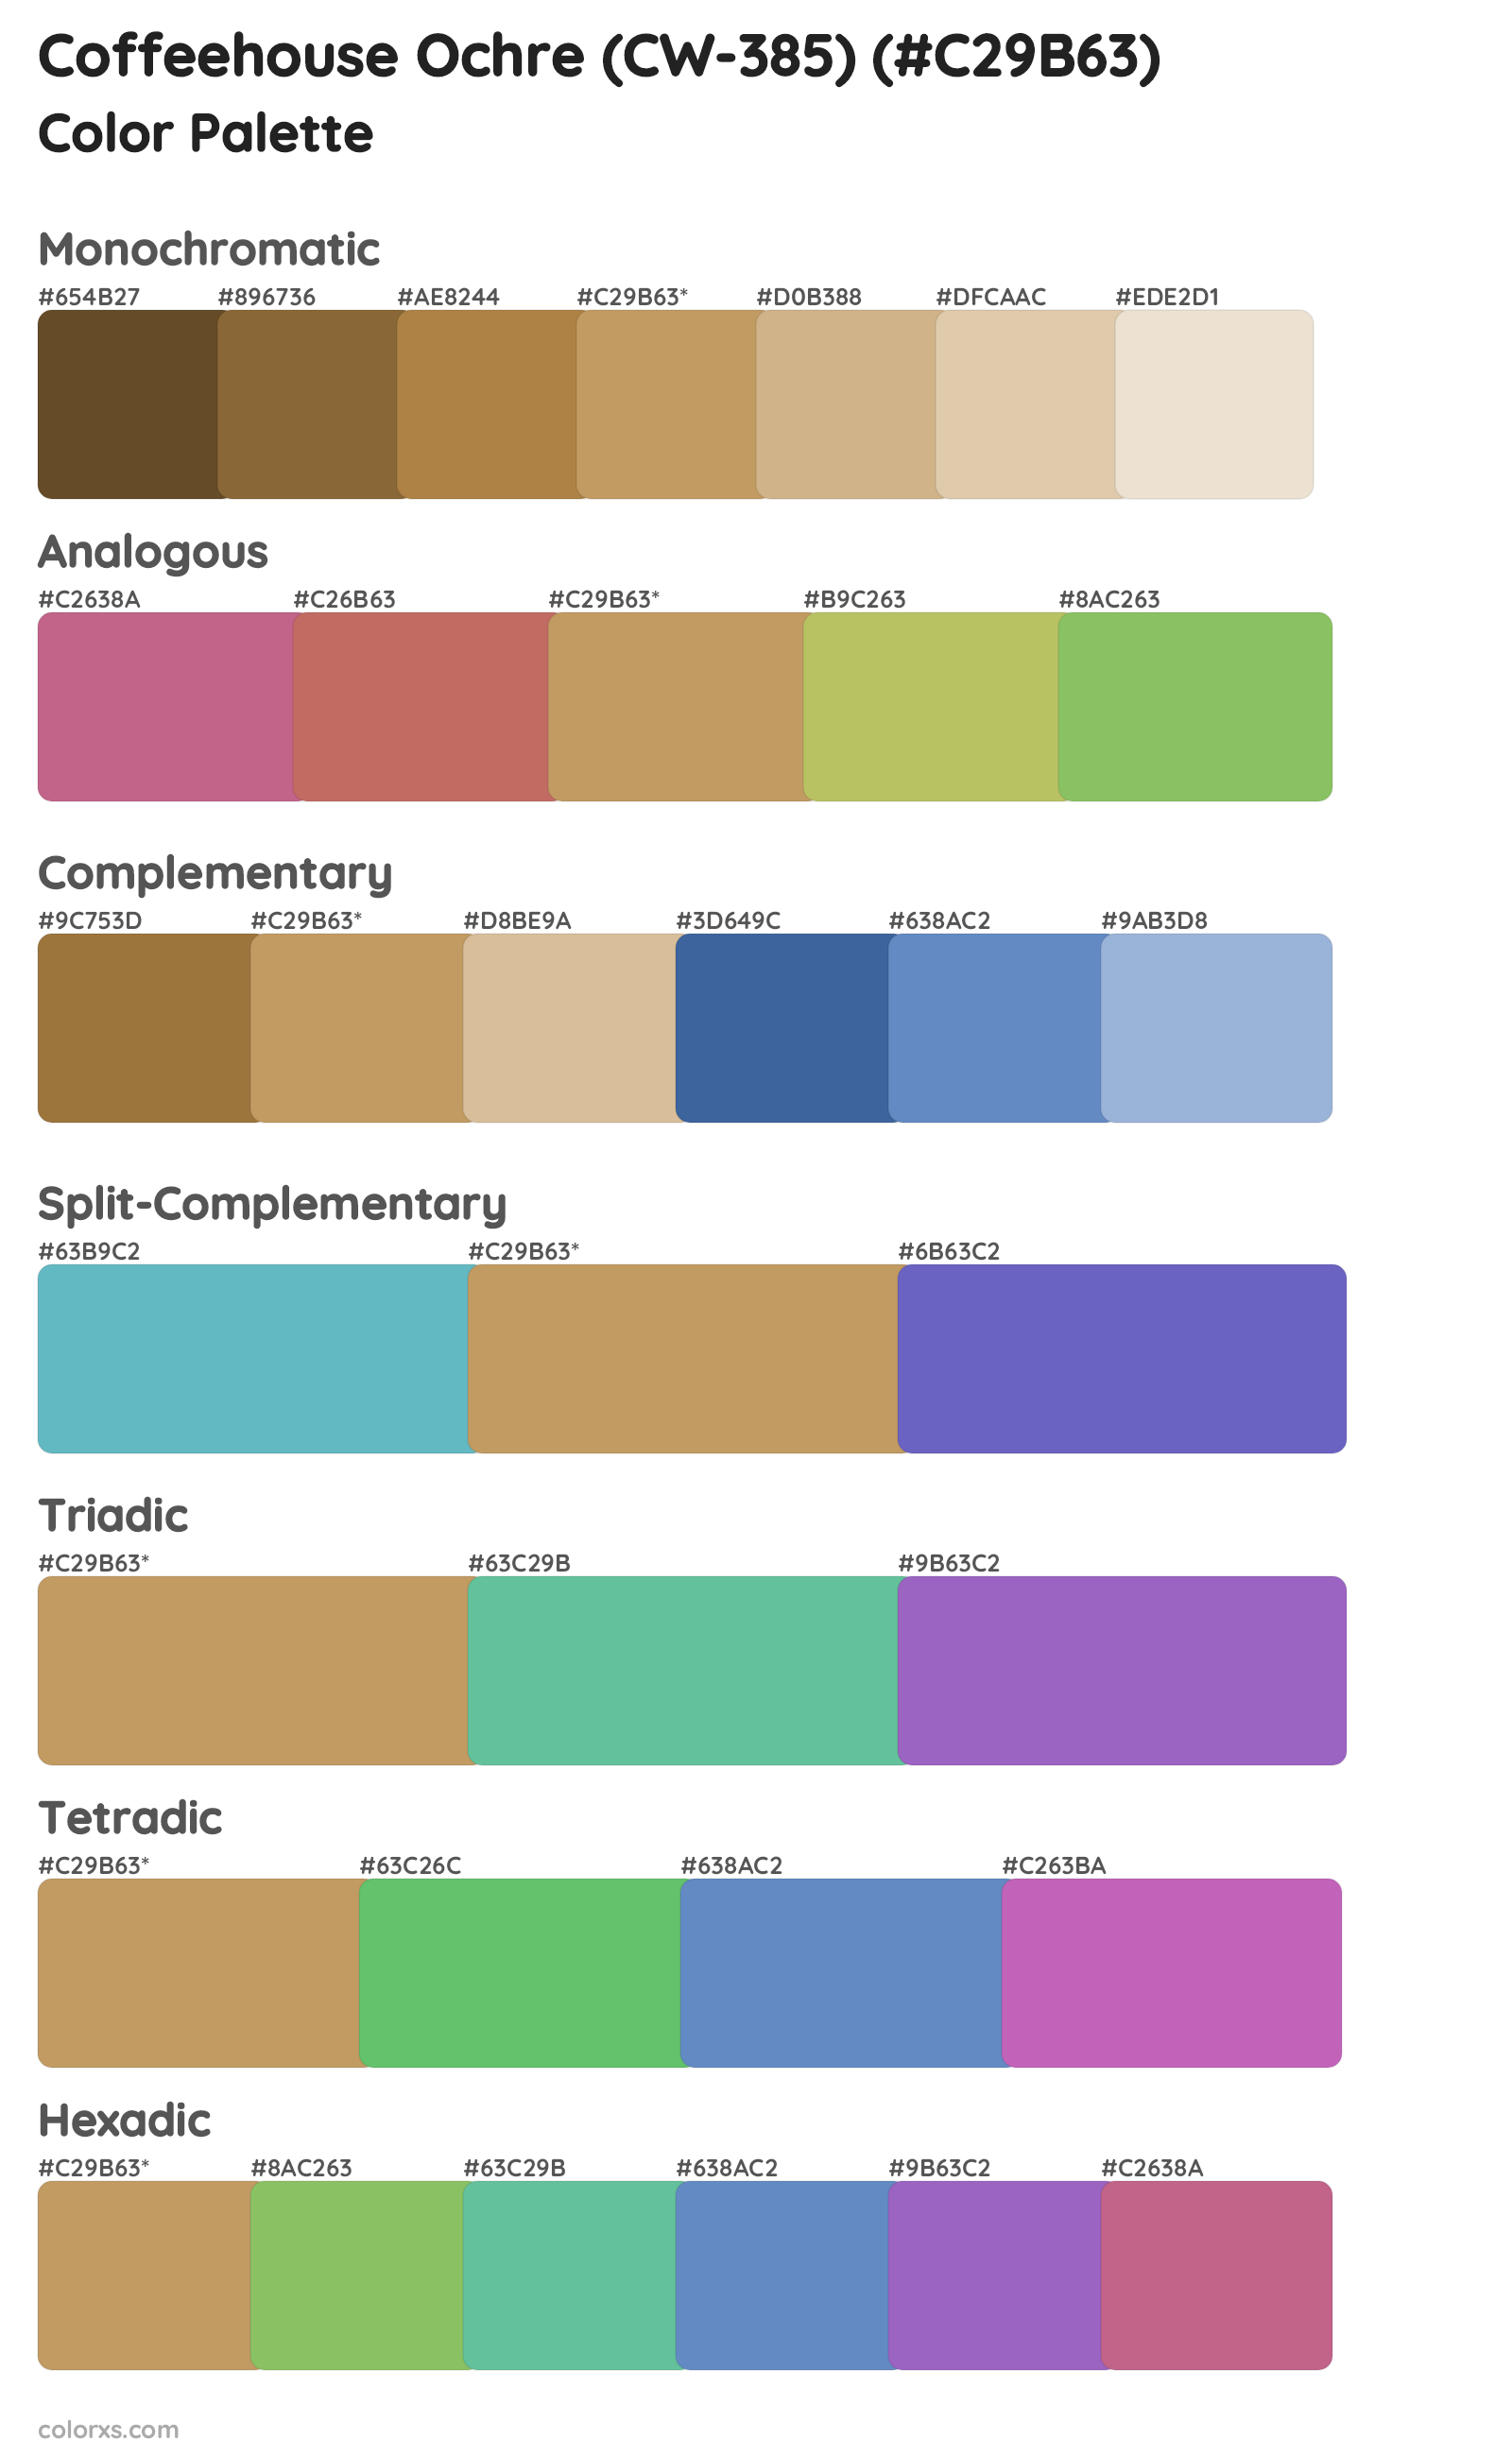 Coffeehouse Ochre (CW-385) Color Scheme Palettes